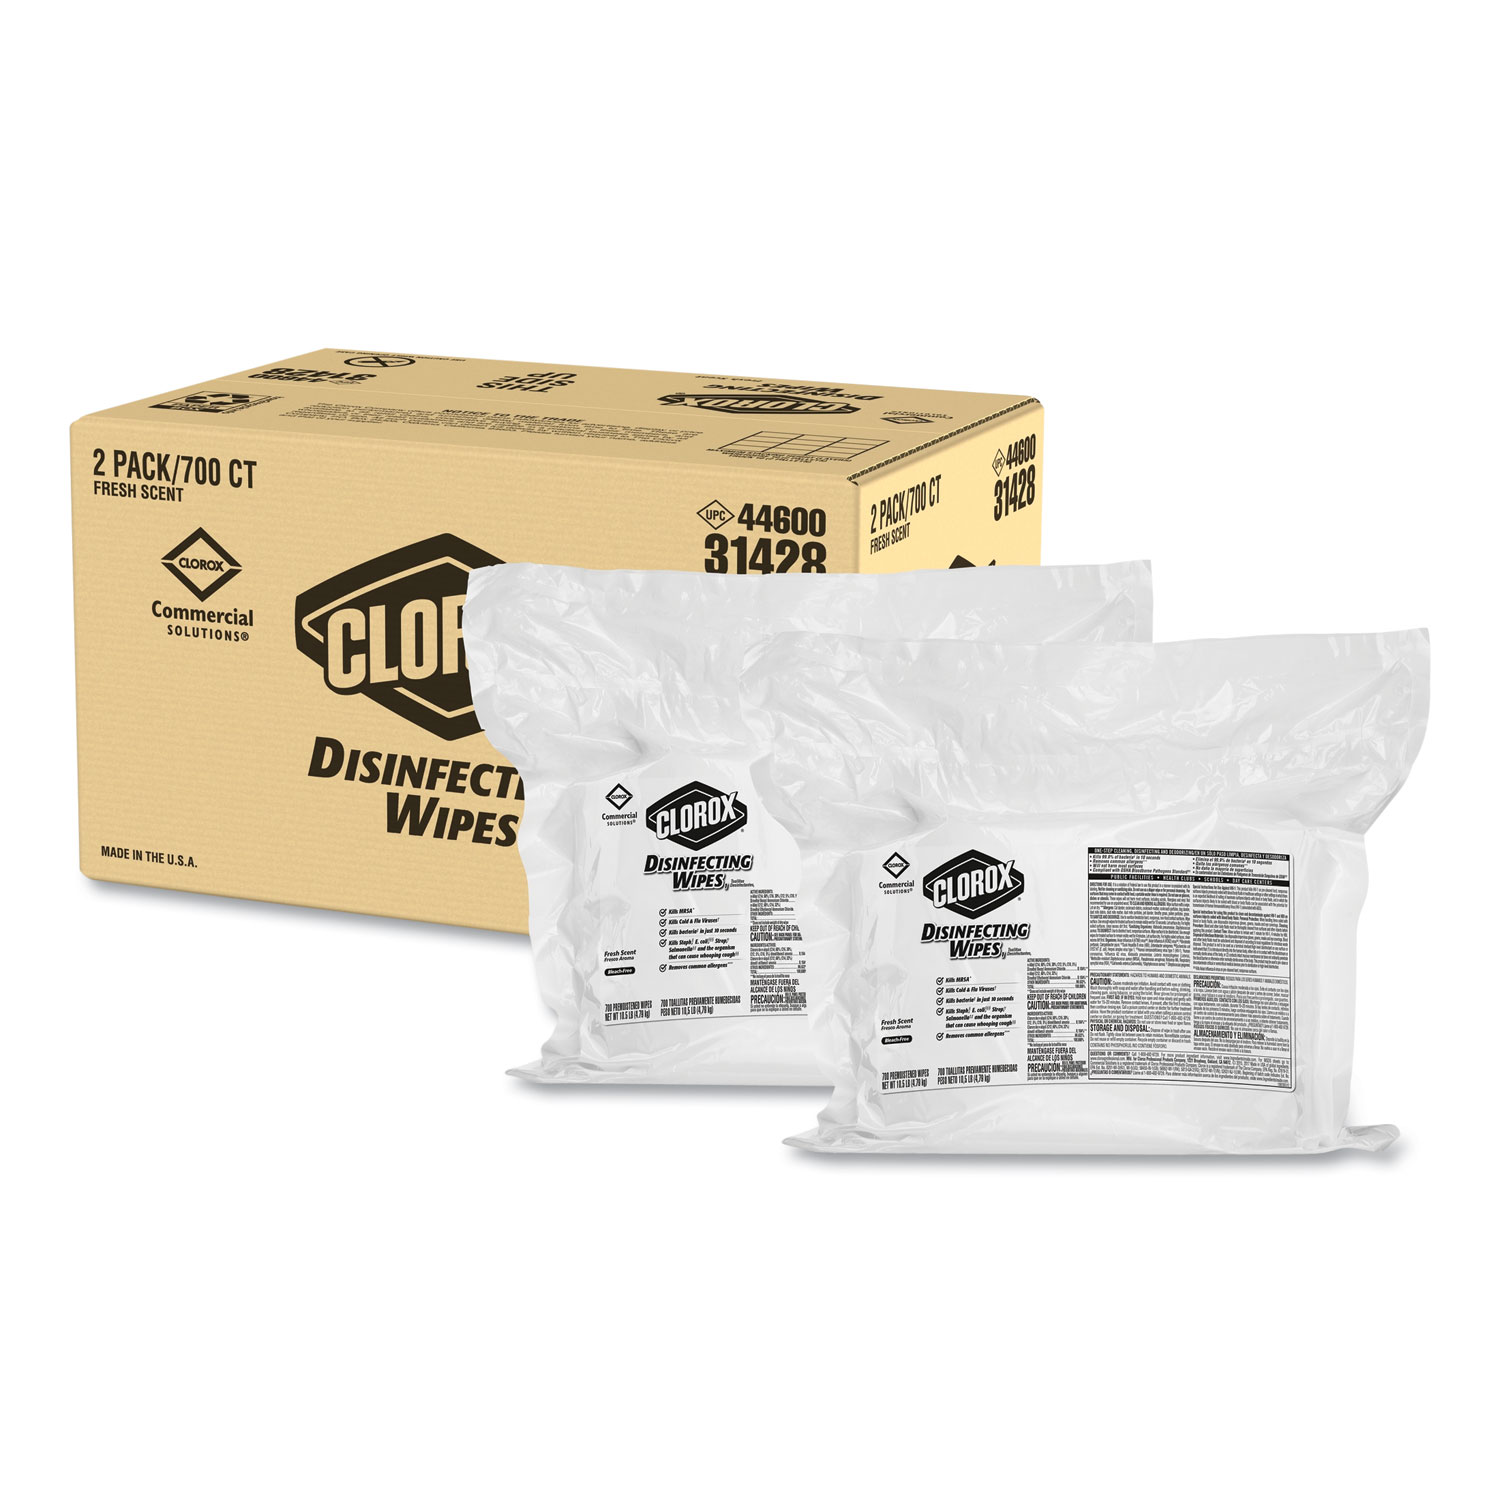  Clorox 31428 Disinfecting Wipes, Fresh Scent, 7 x 8, 700/Bag Refill, 2/Carton (CLO31428) 